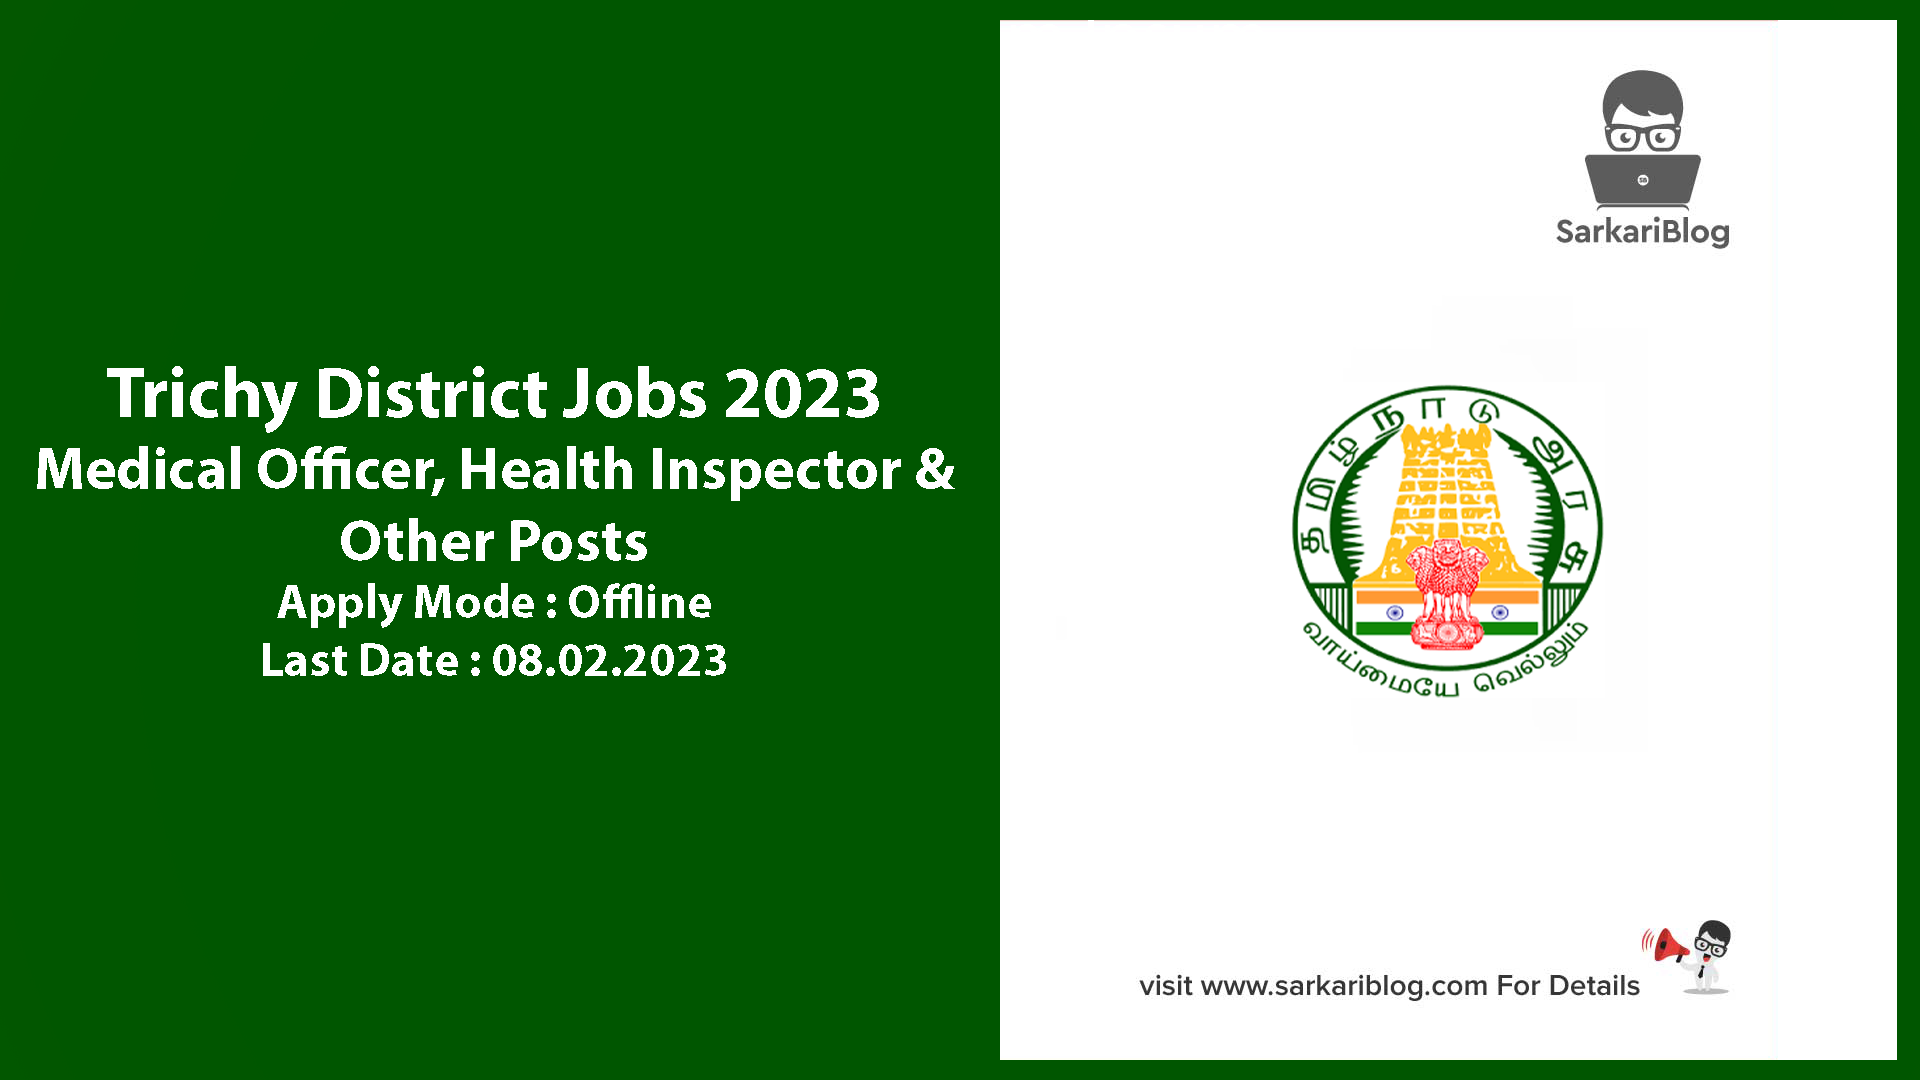 Trichy District Jobs 2023